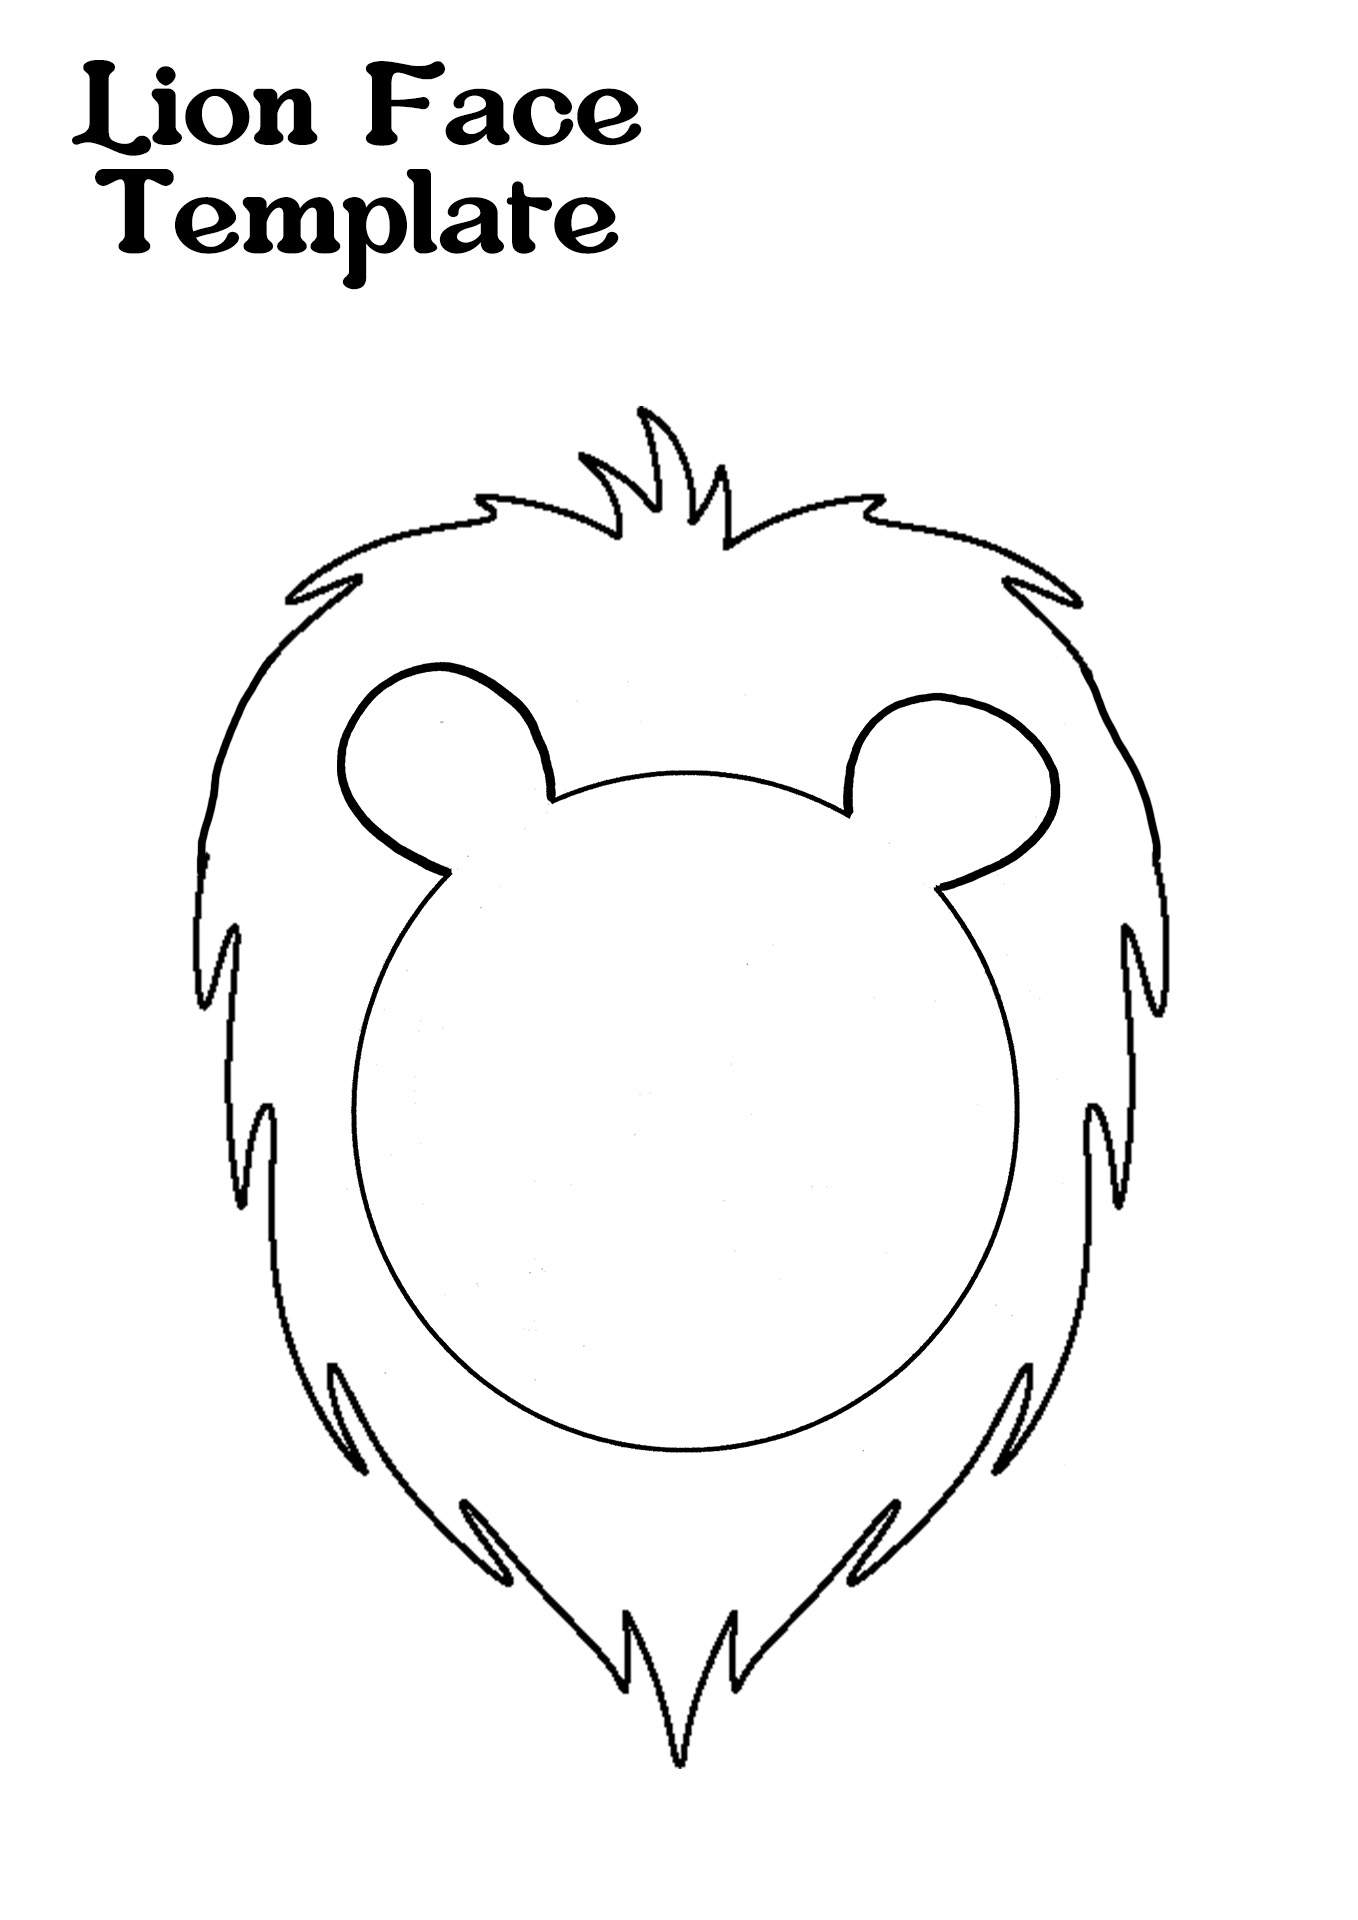 Lion Face Template Image